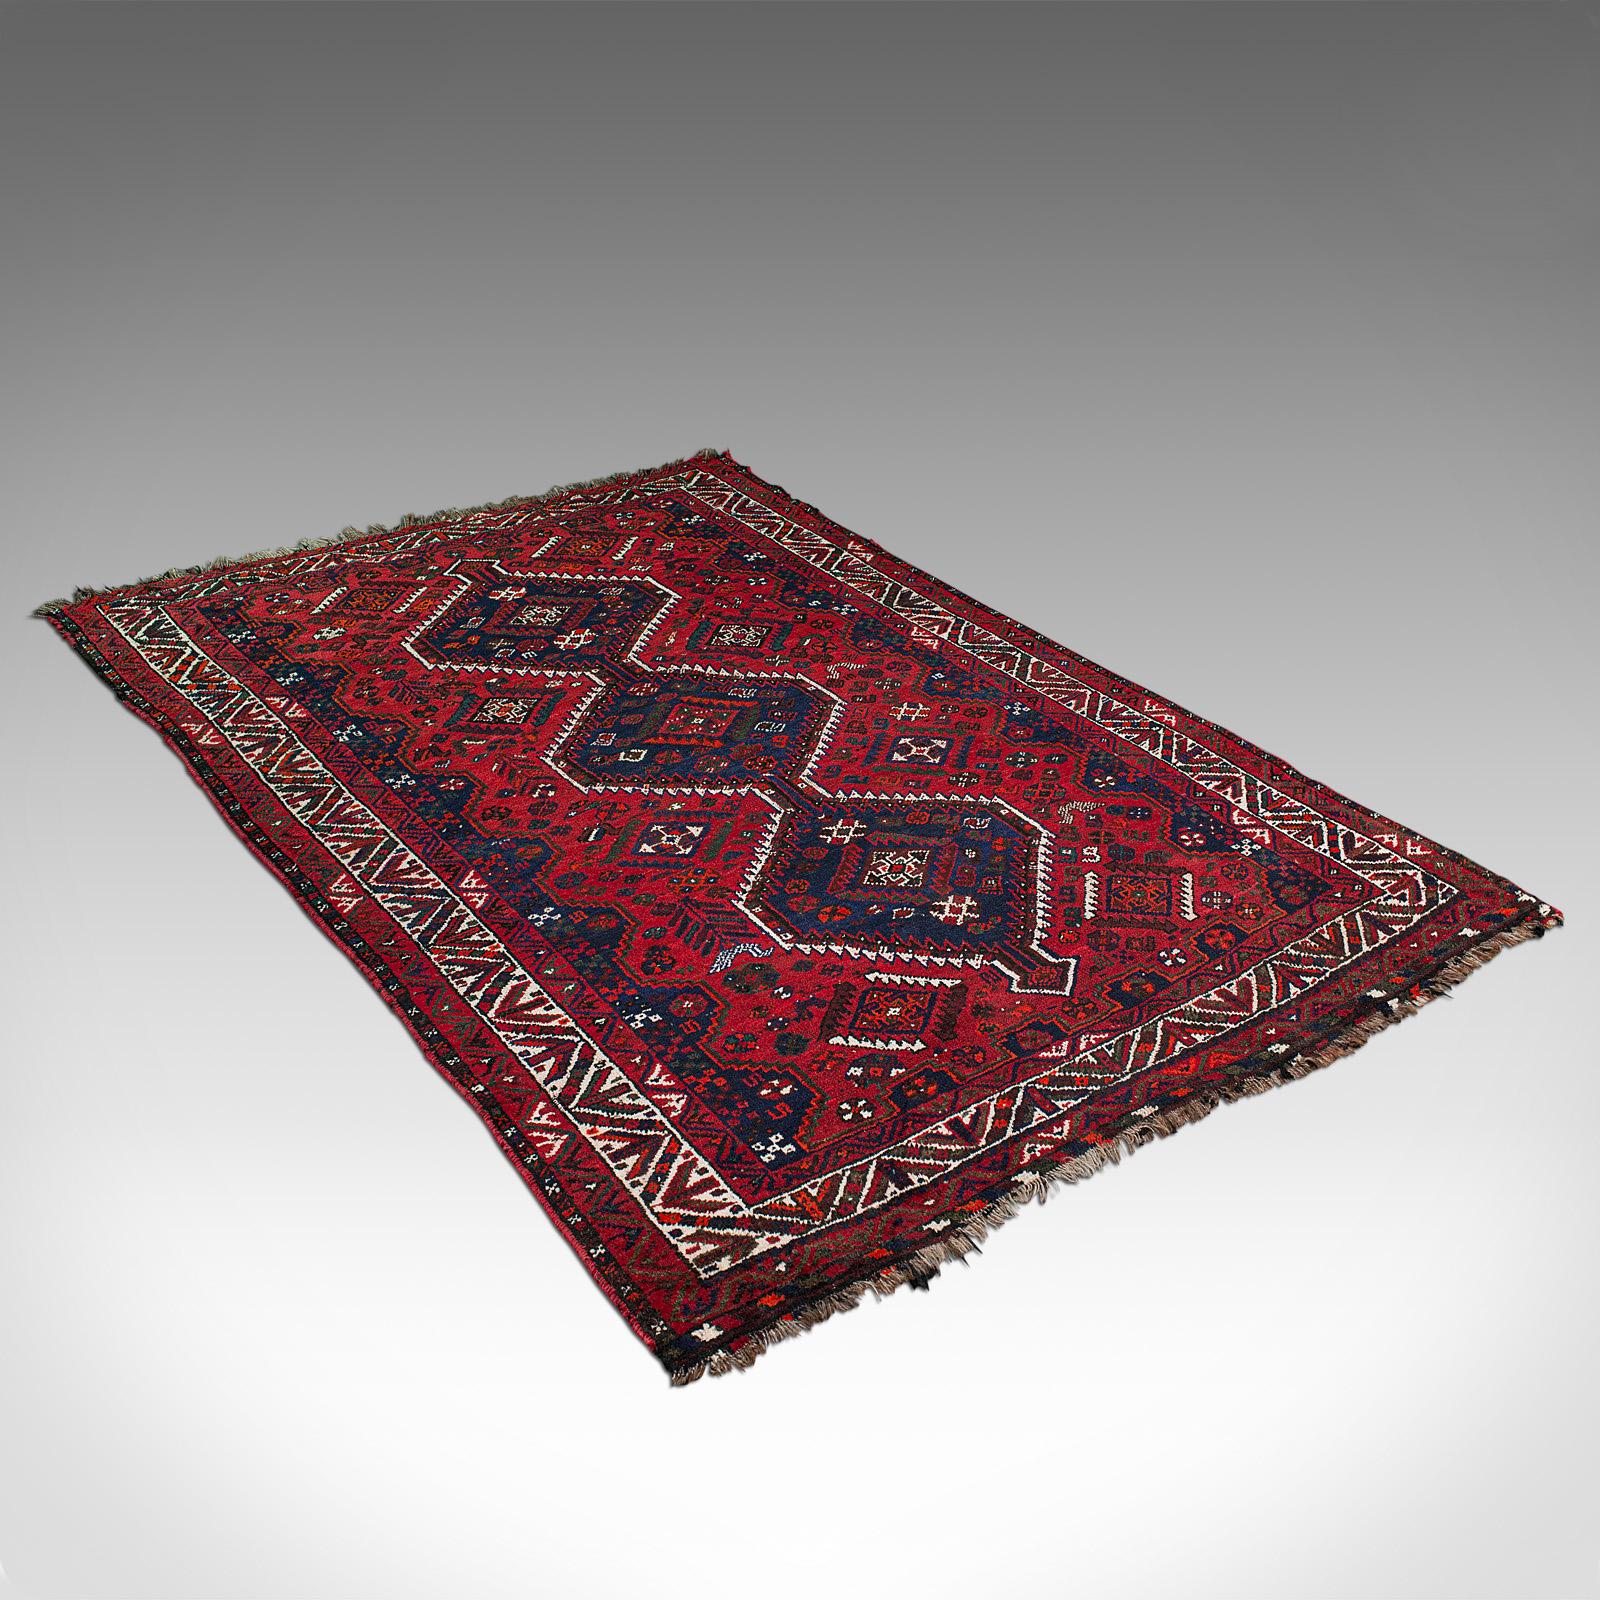 Antique Turkoman Carpet, Caucasian, Hand Woven, Lounge, Hallway, Rug, Circa 1900 In Good Condition For Sale In Hele, Devon, GB